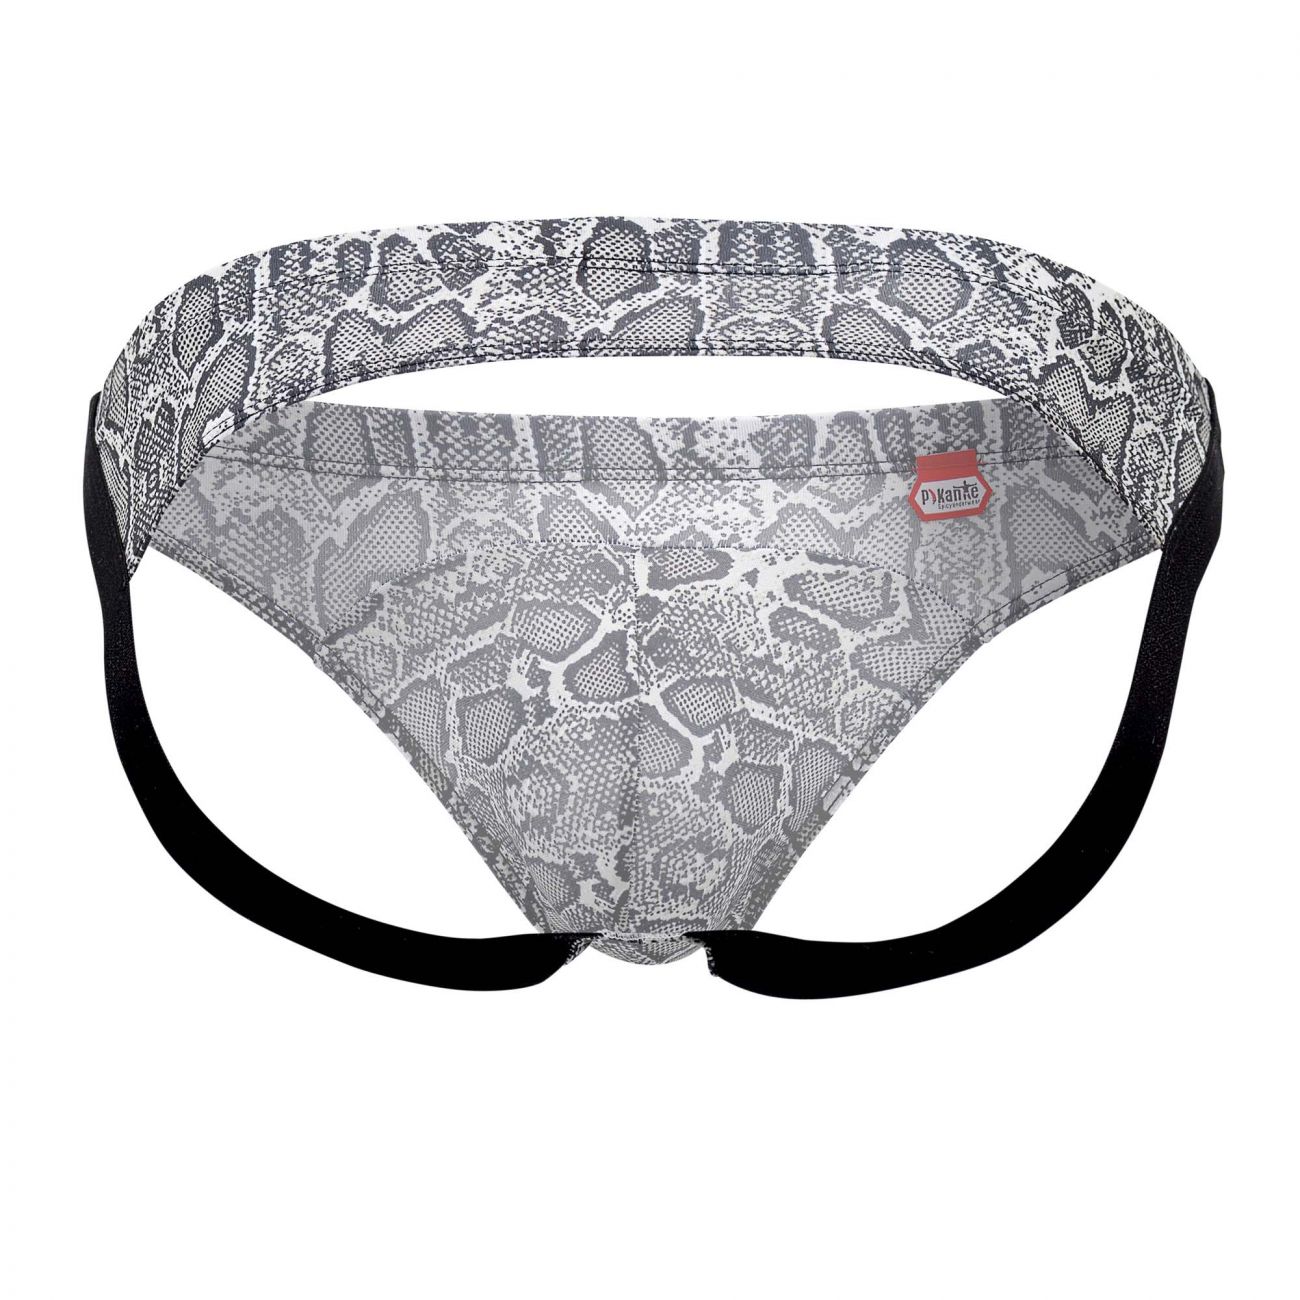 Mens Underwear: Pikante 9303 Touch Jockstrap | eBay